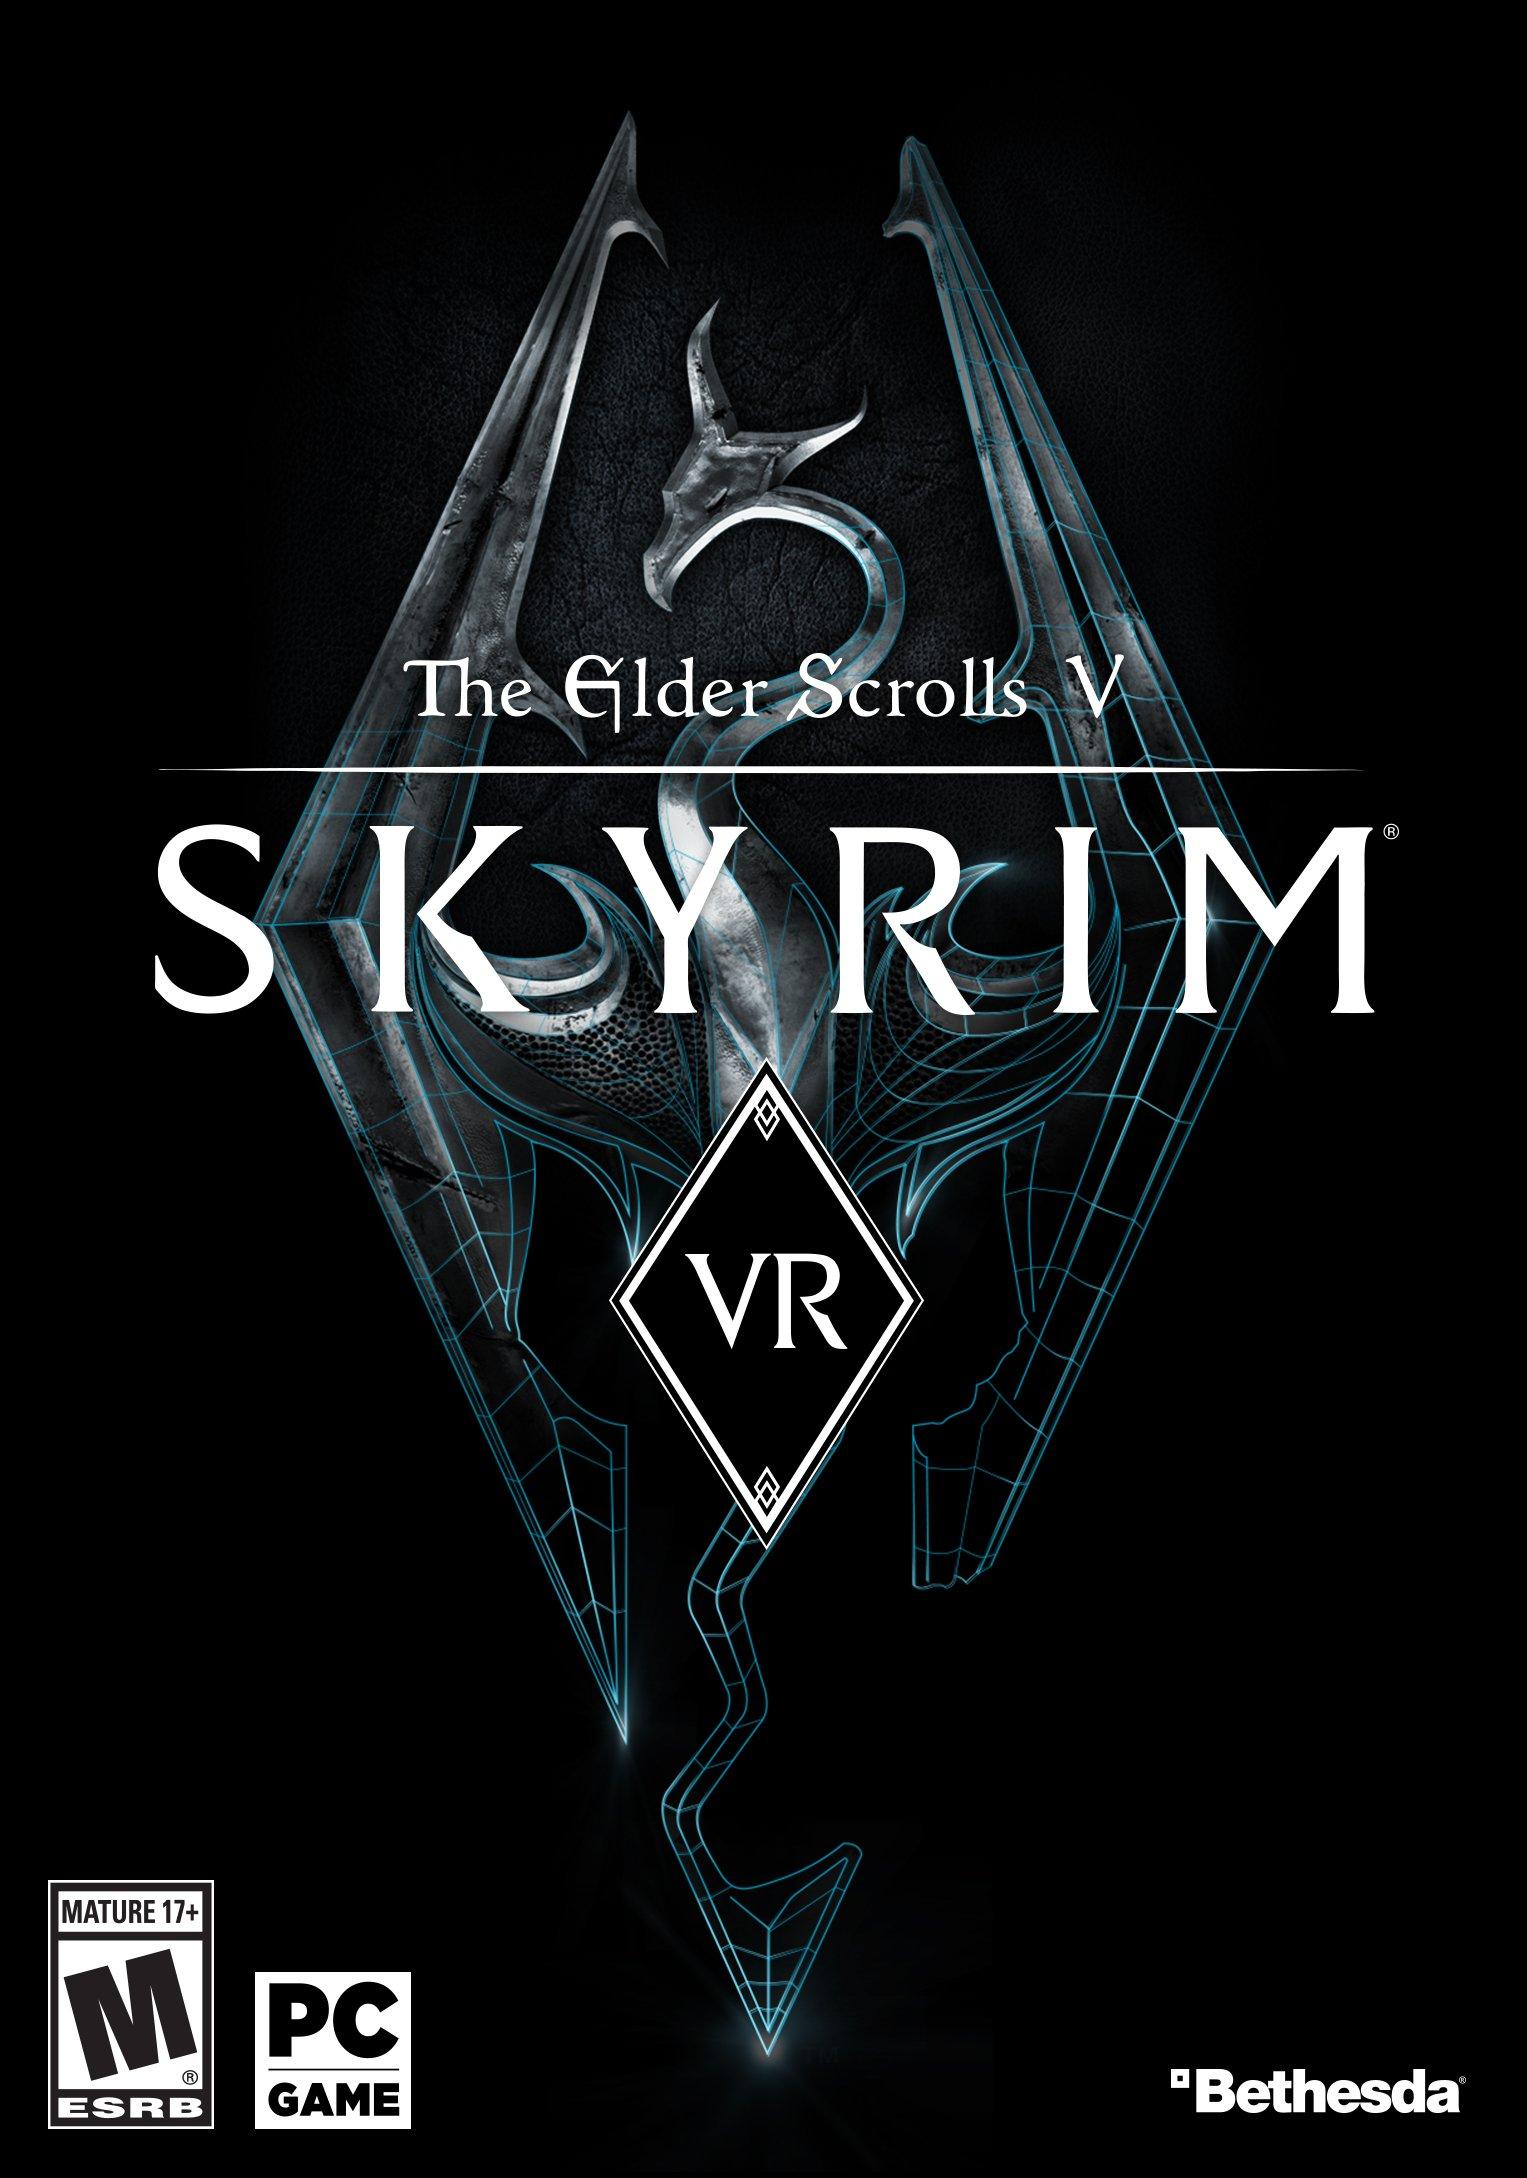 The Elder Scrolls V Skyrim VR - PC